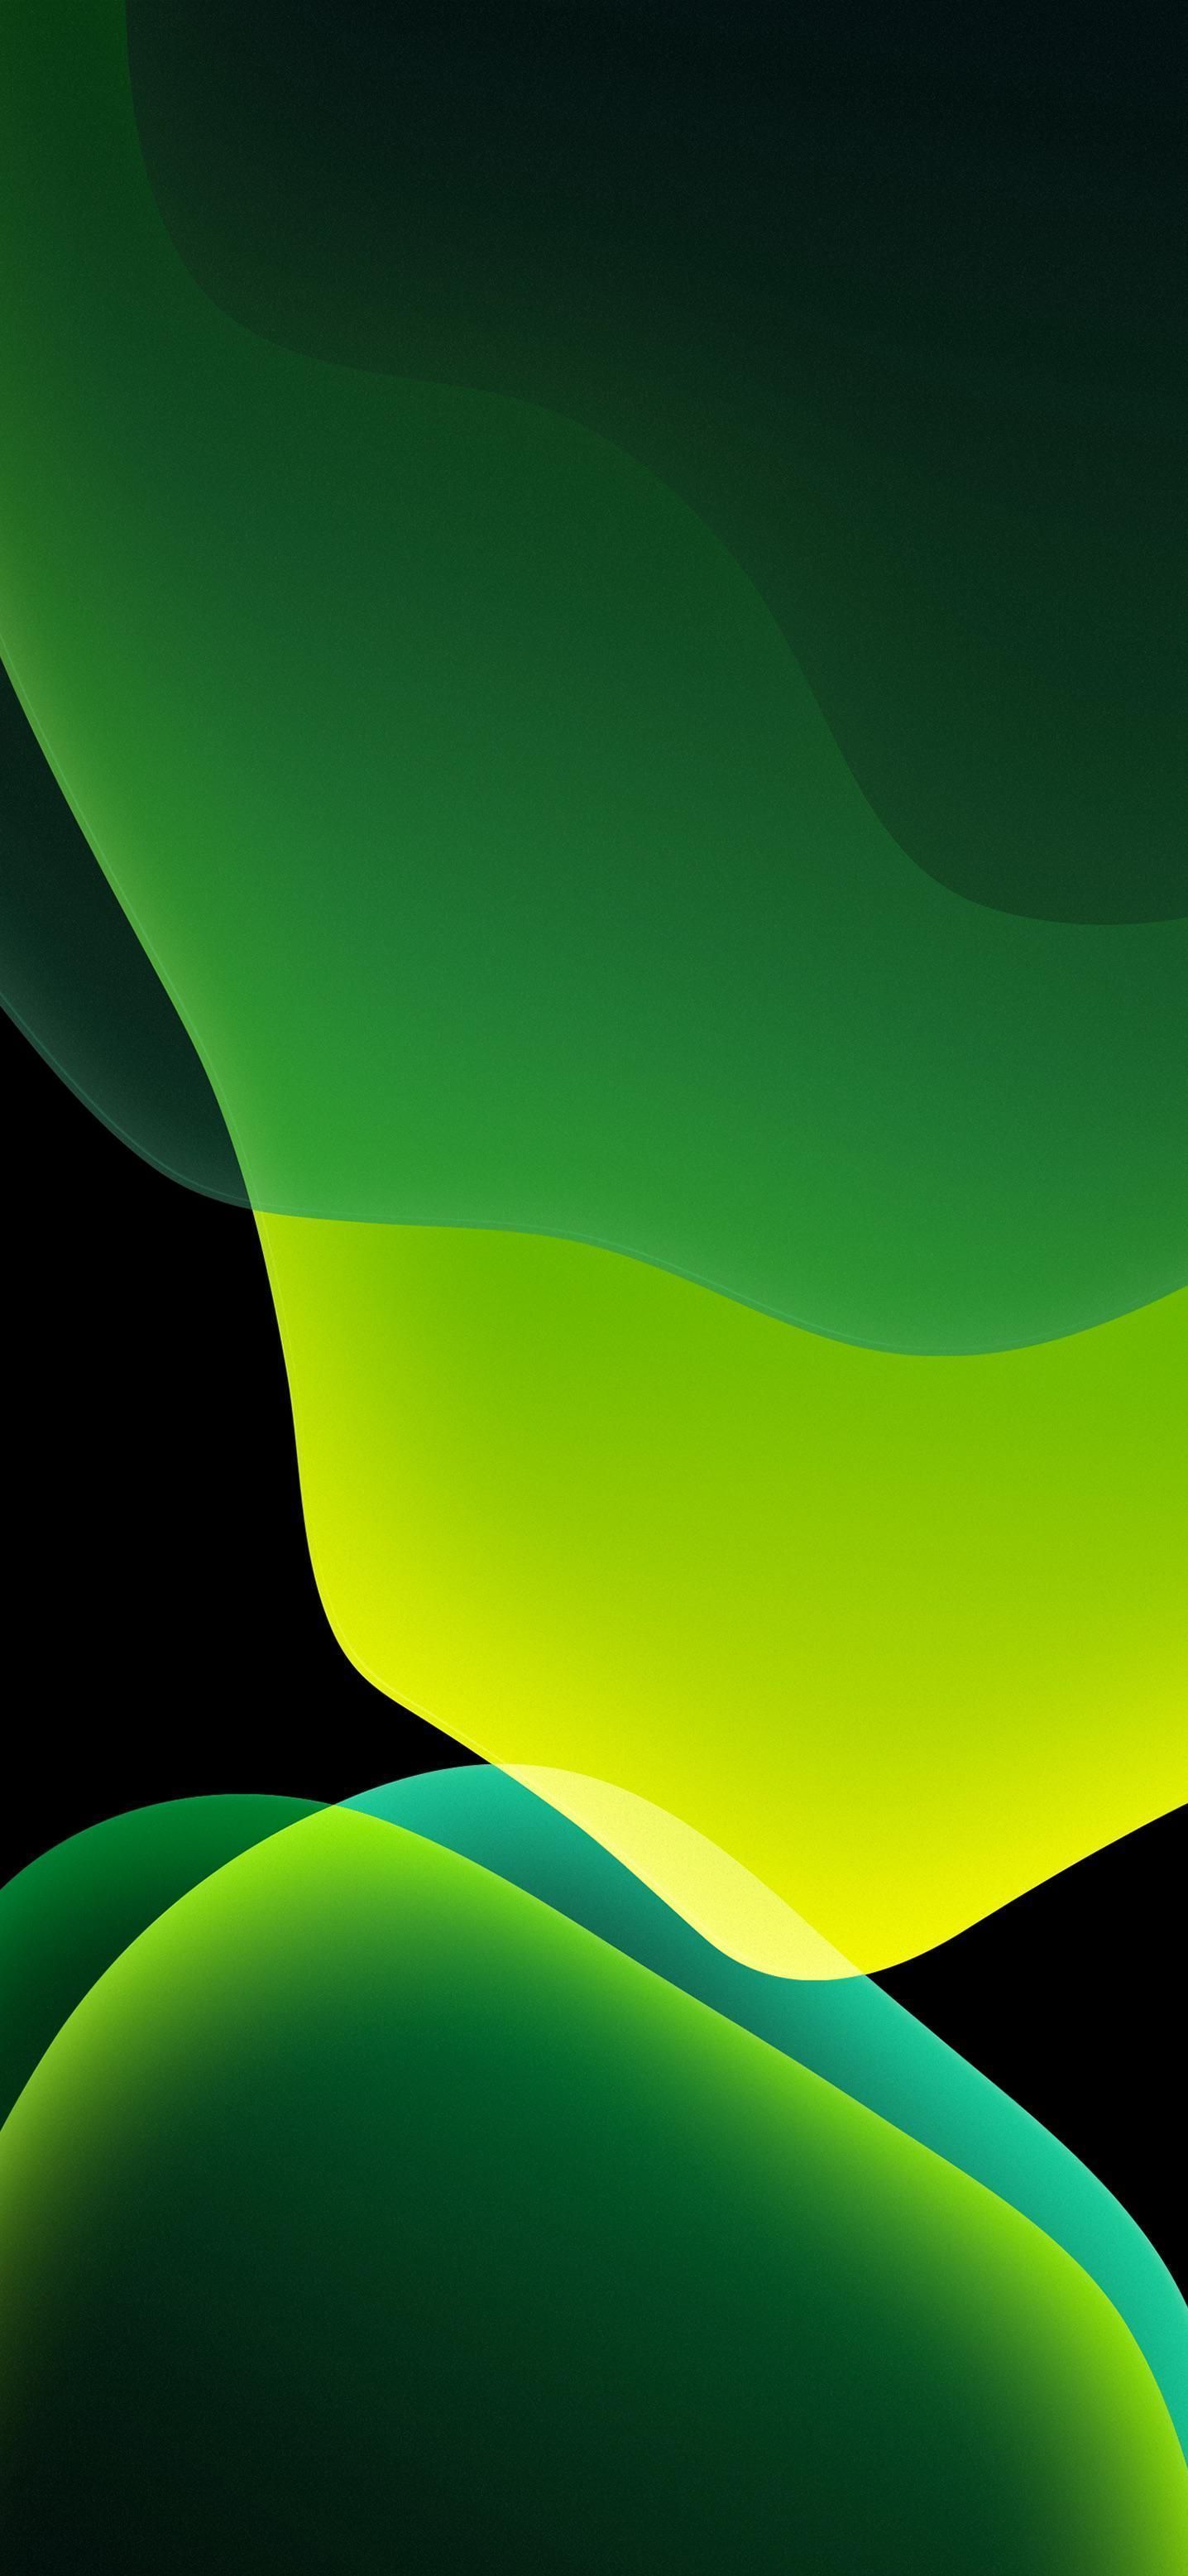 Green iPhone 4k Wallpapers - Wallpaper Cave